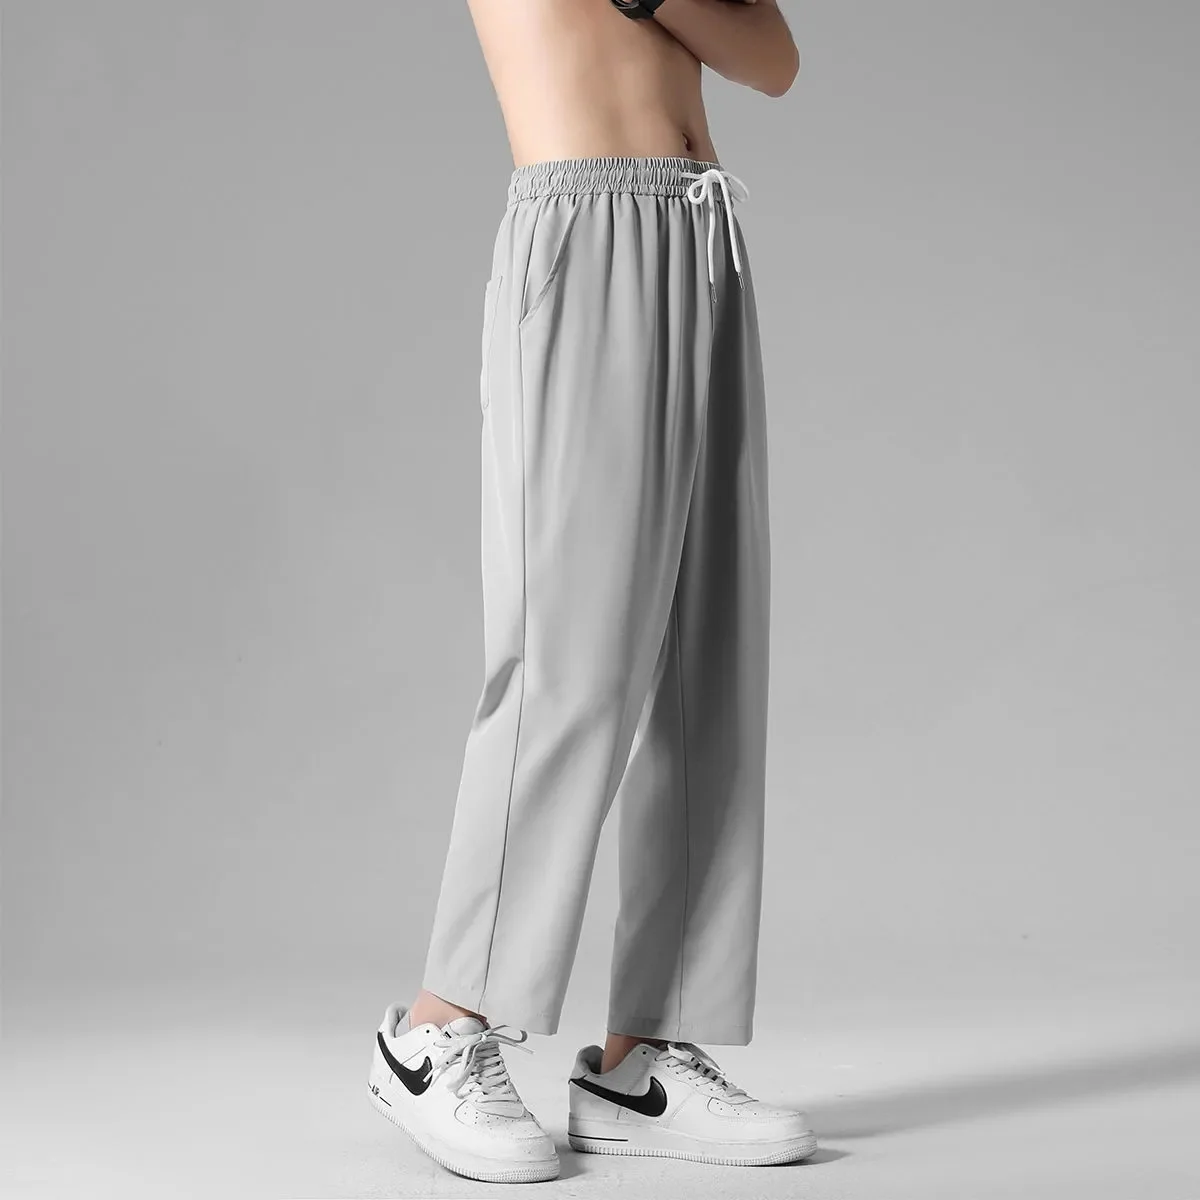 Fashion Men Spring Summer Versatile Casual Pants Aesthetic Koreon Pocket Elastic Waist New Black Grey Joggers Sports Trousers